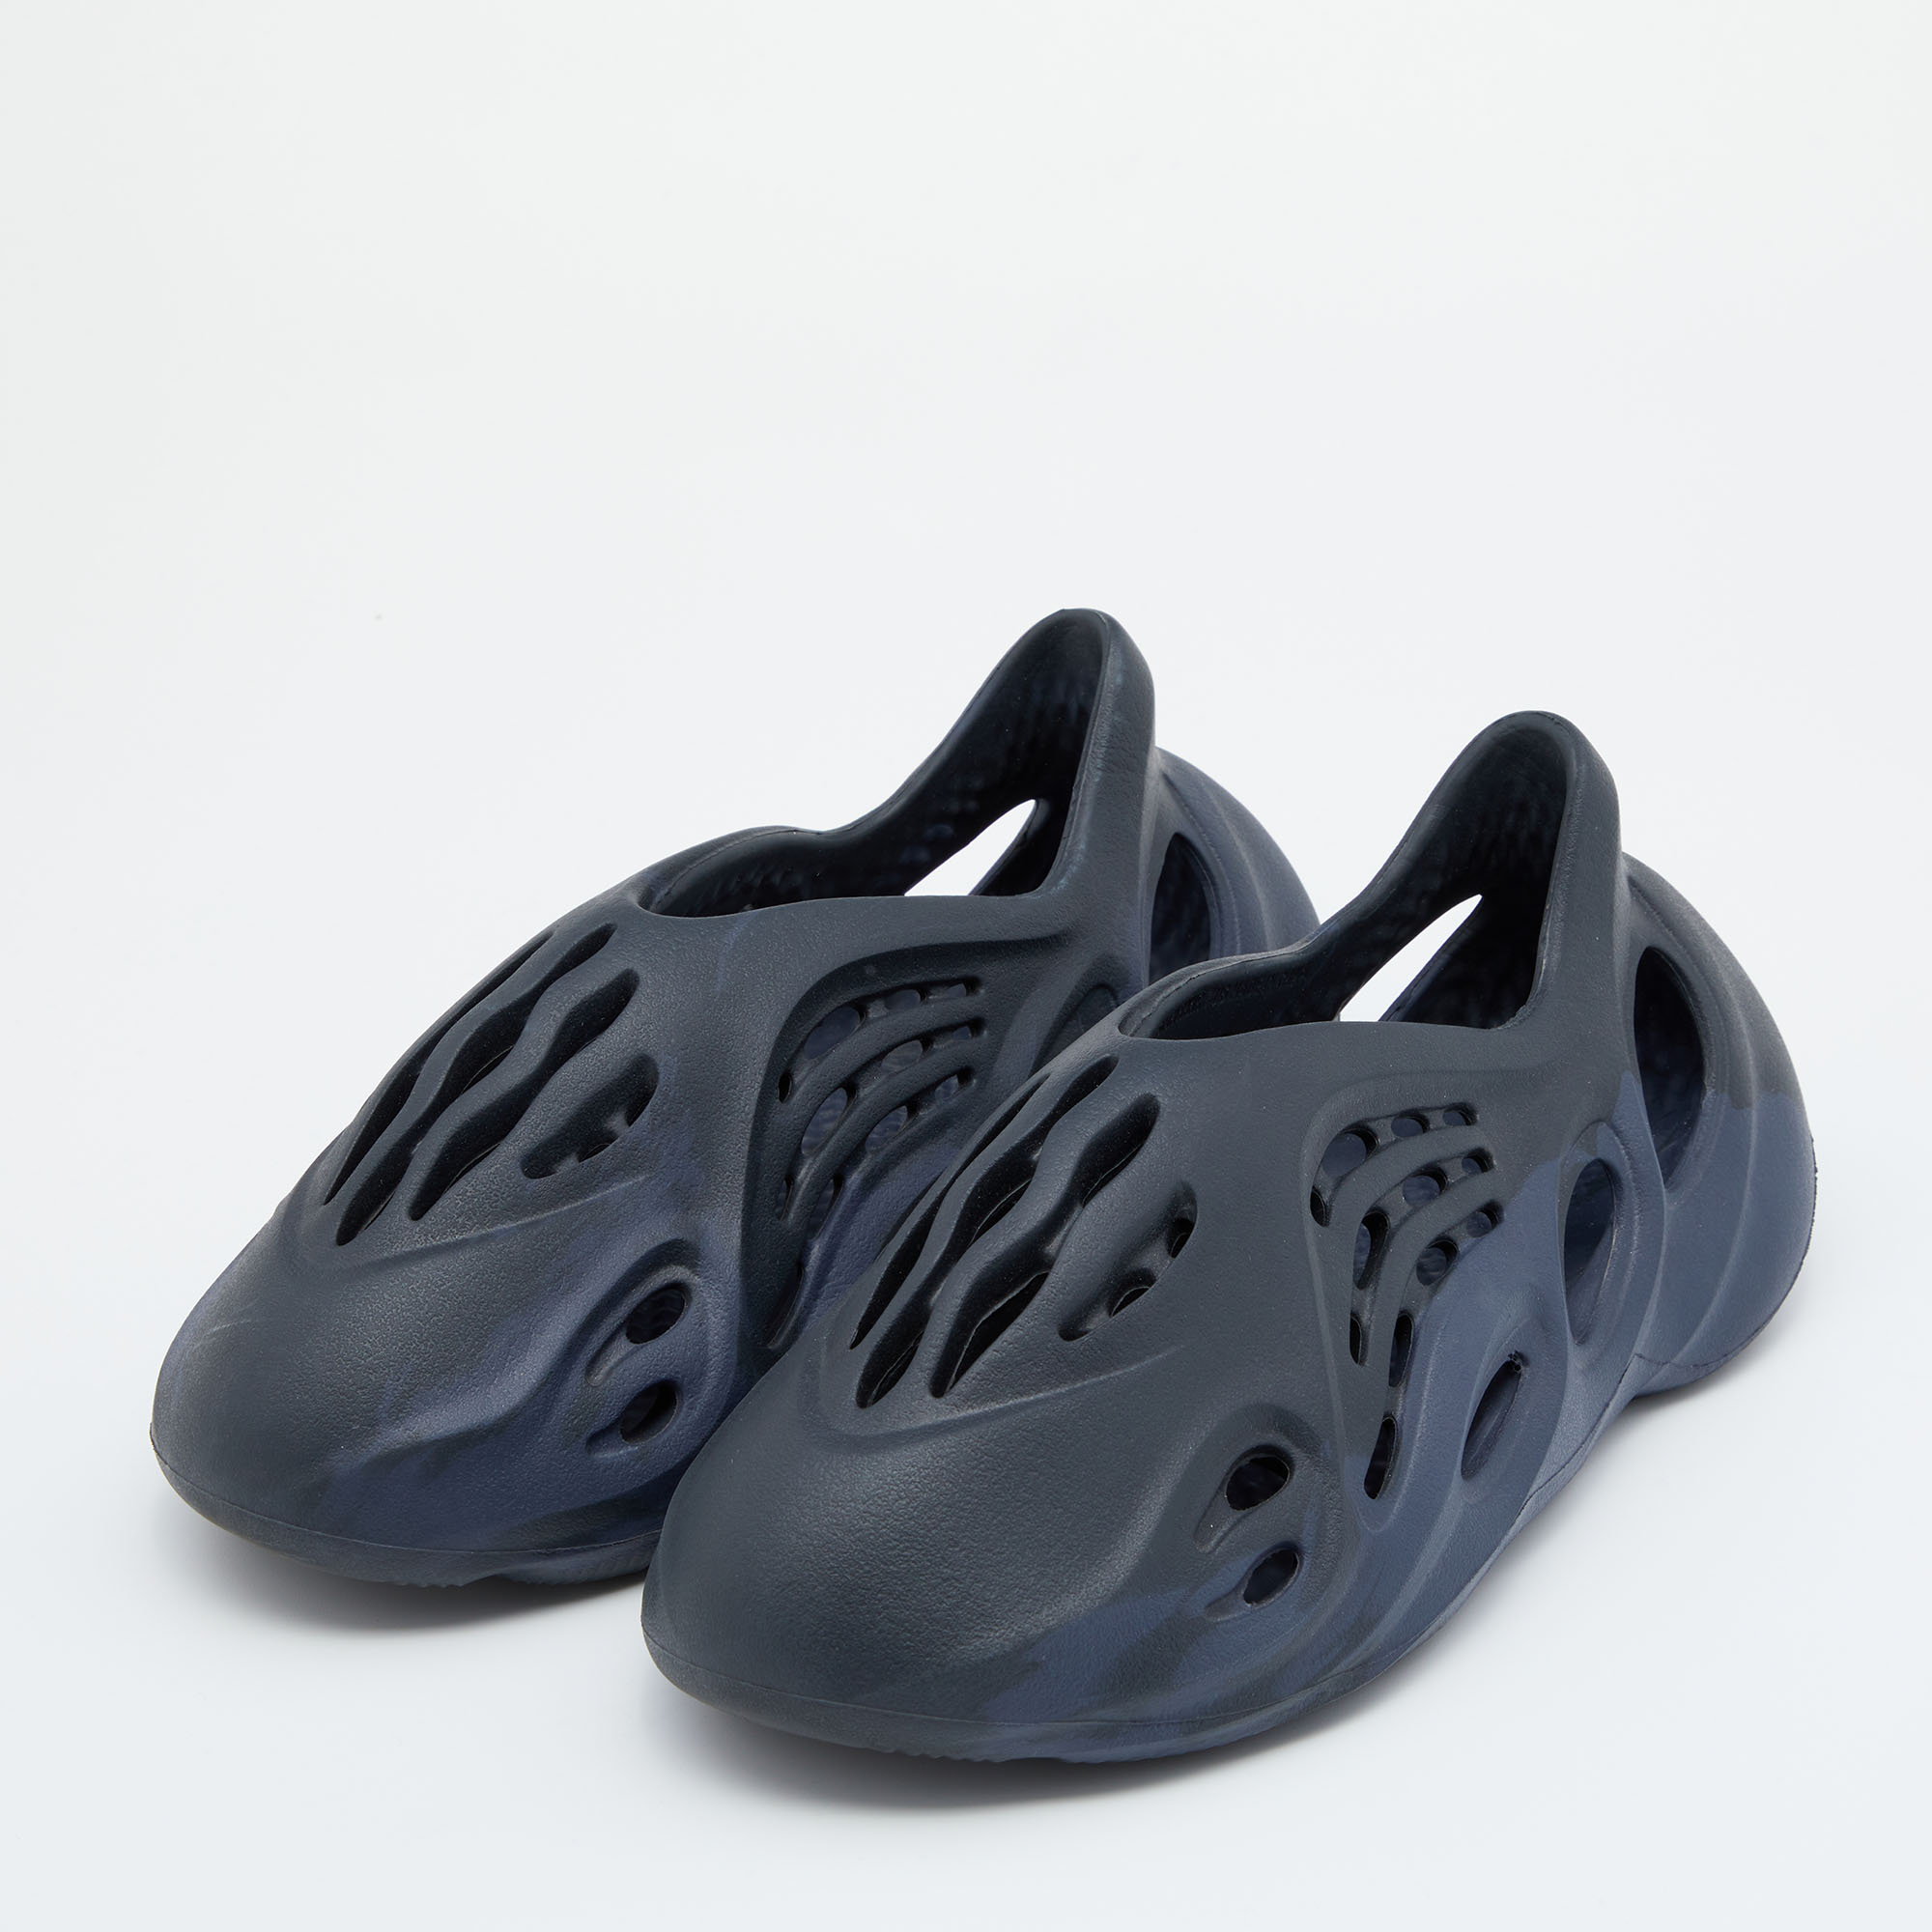 

Yeezy x Adidas Black Rubber Foam Sand Runner Sneakers Size